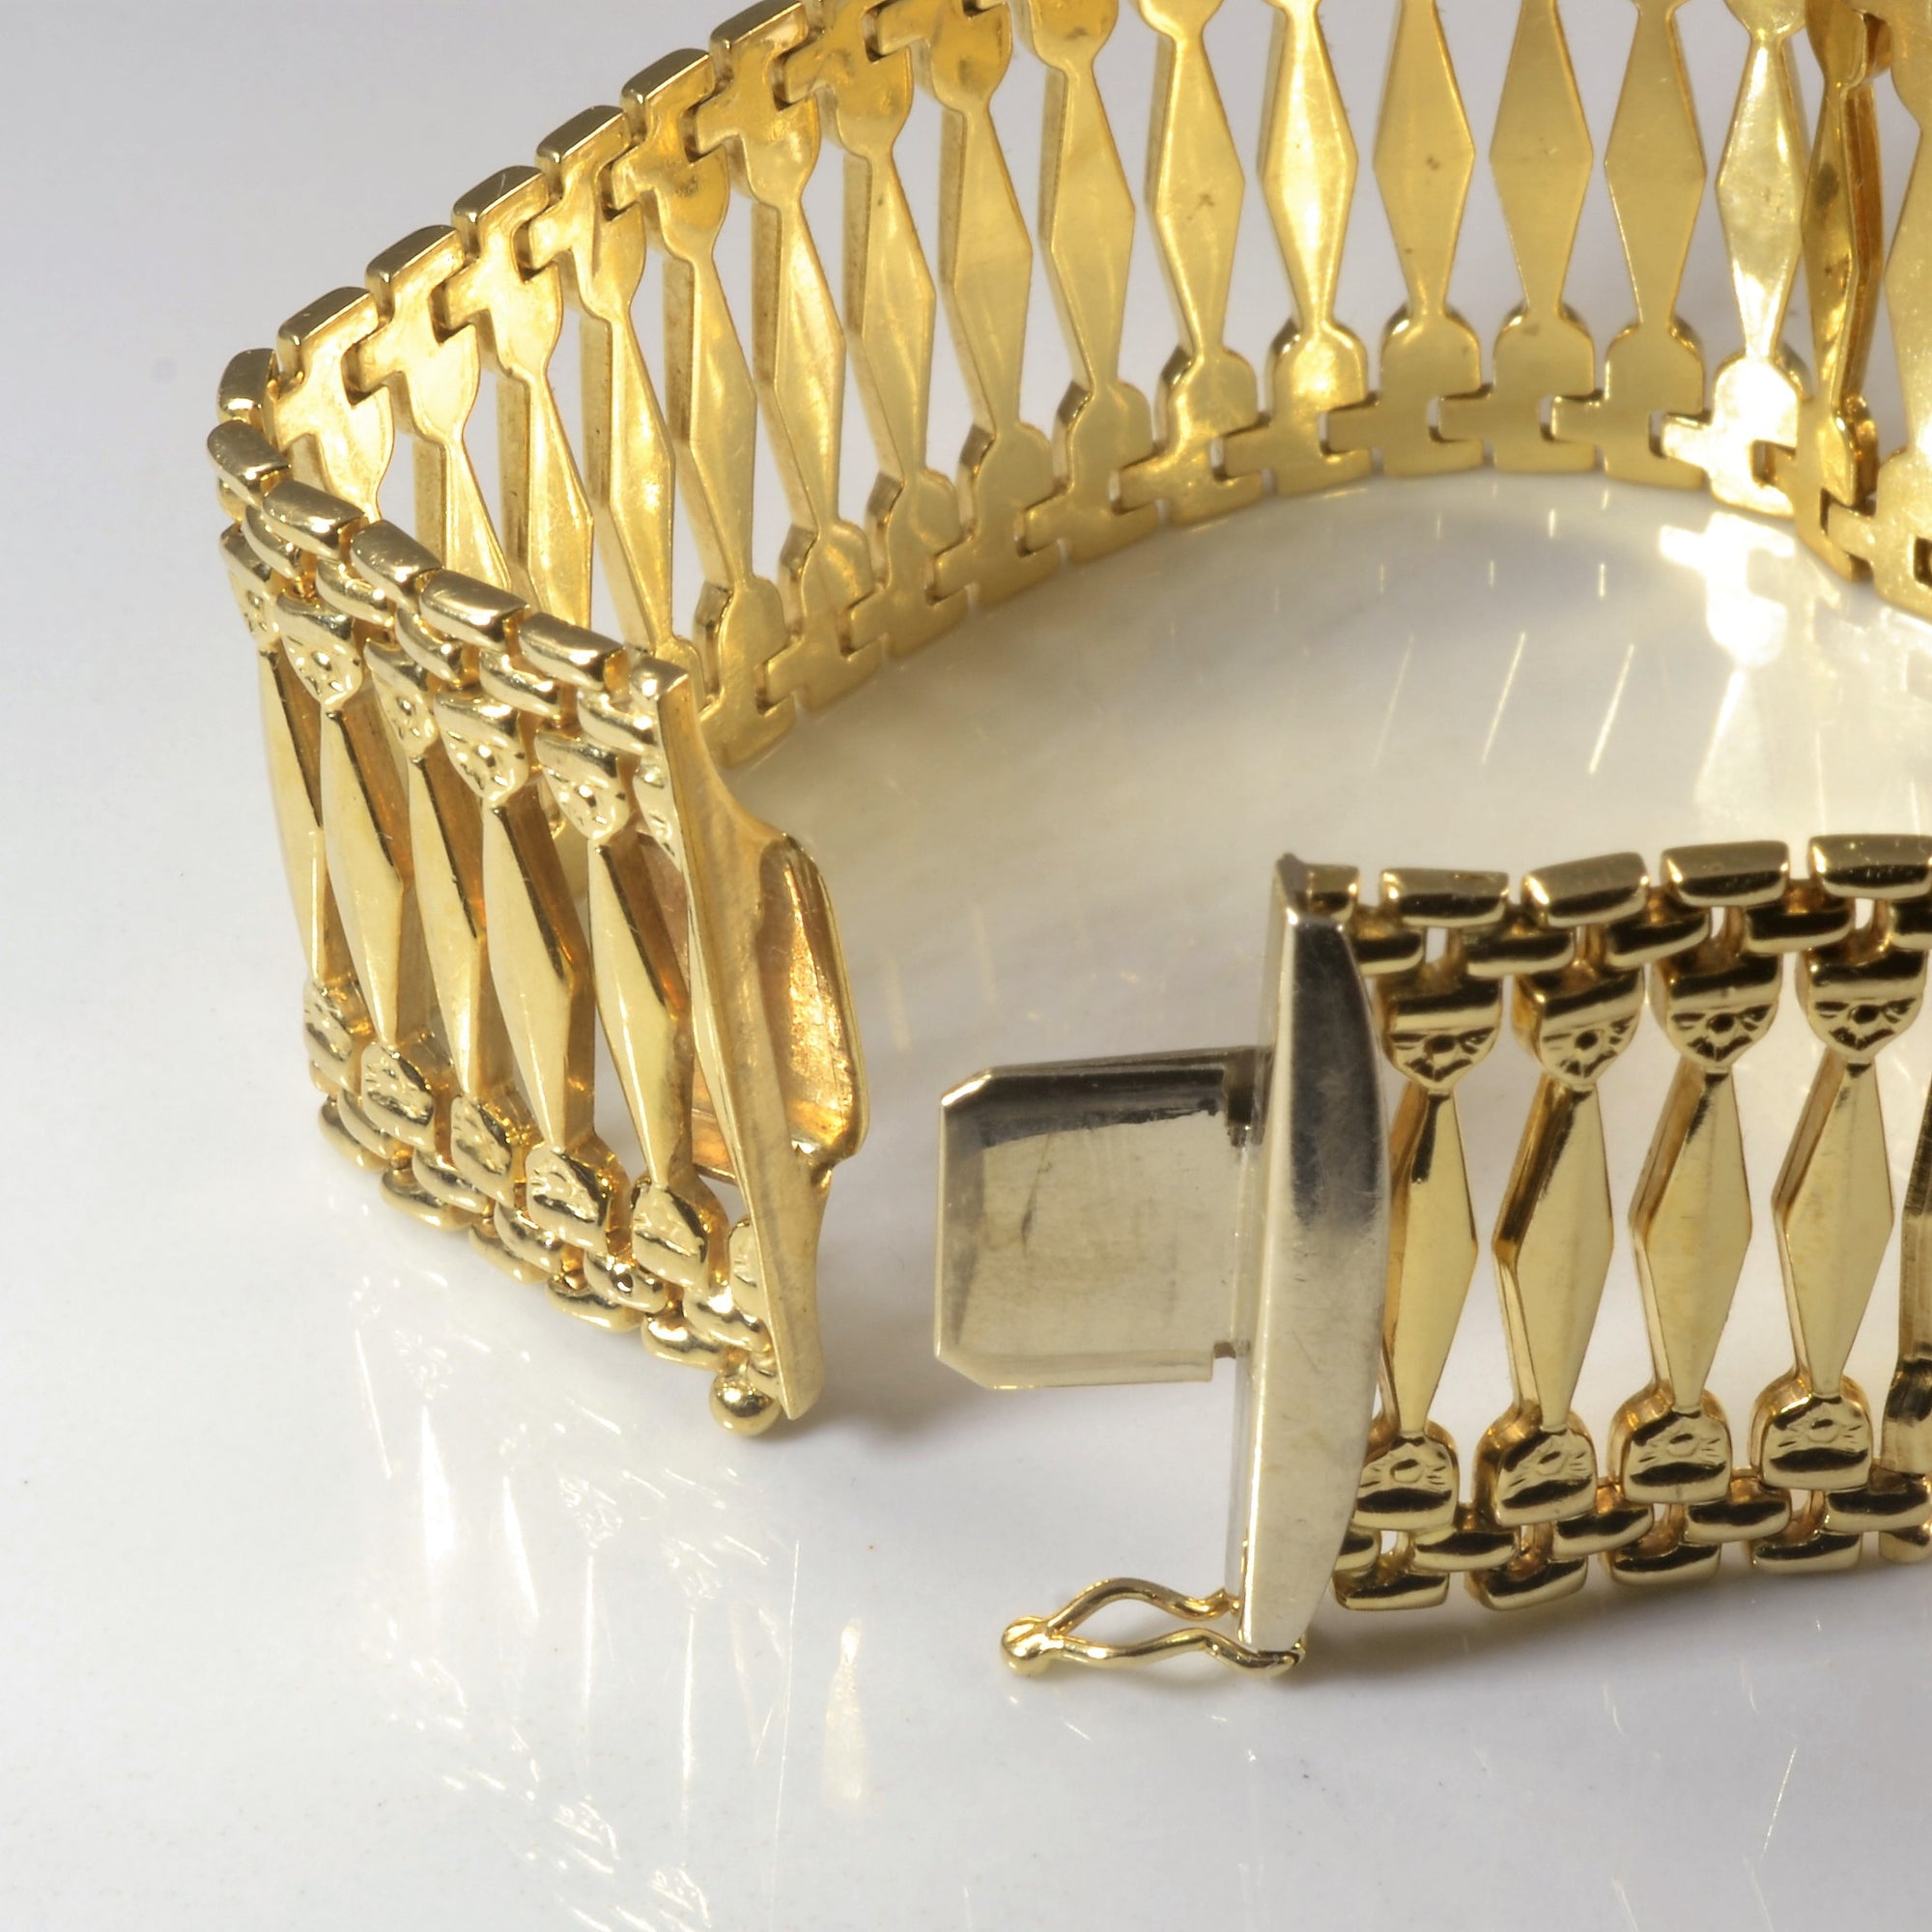 Textured Gold Bar Bracelet | 7